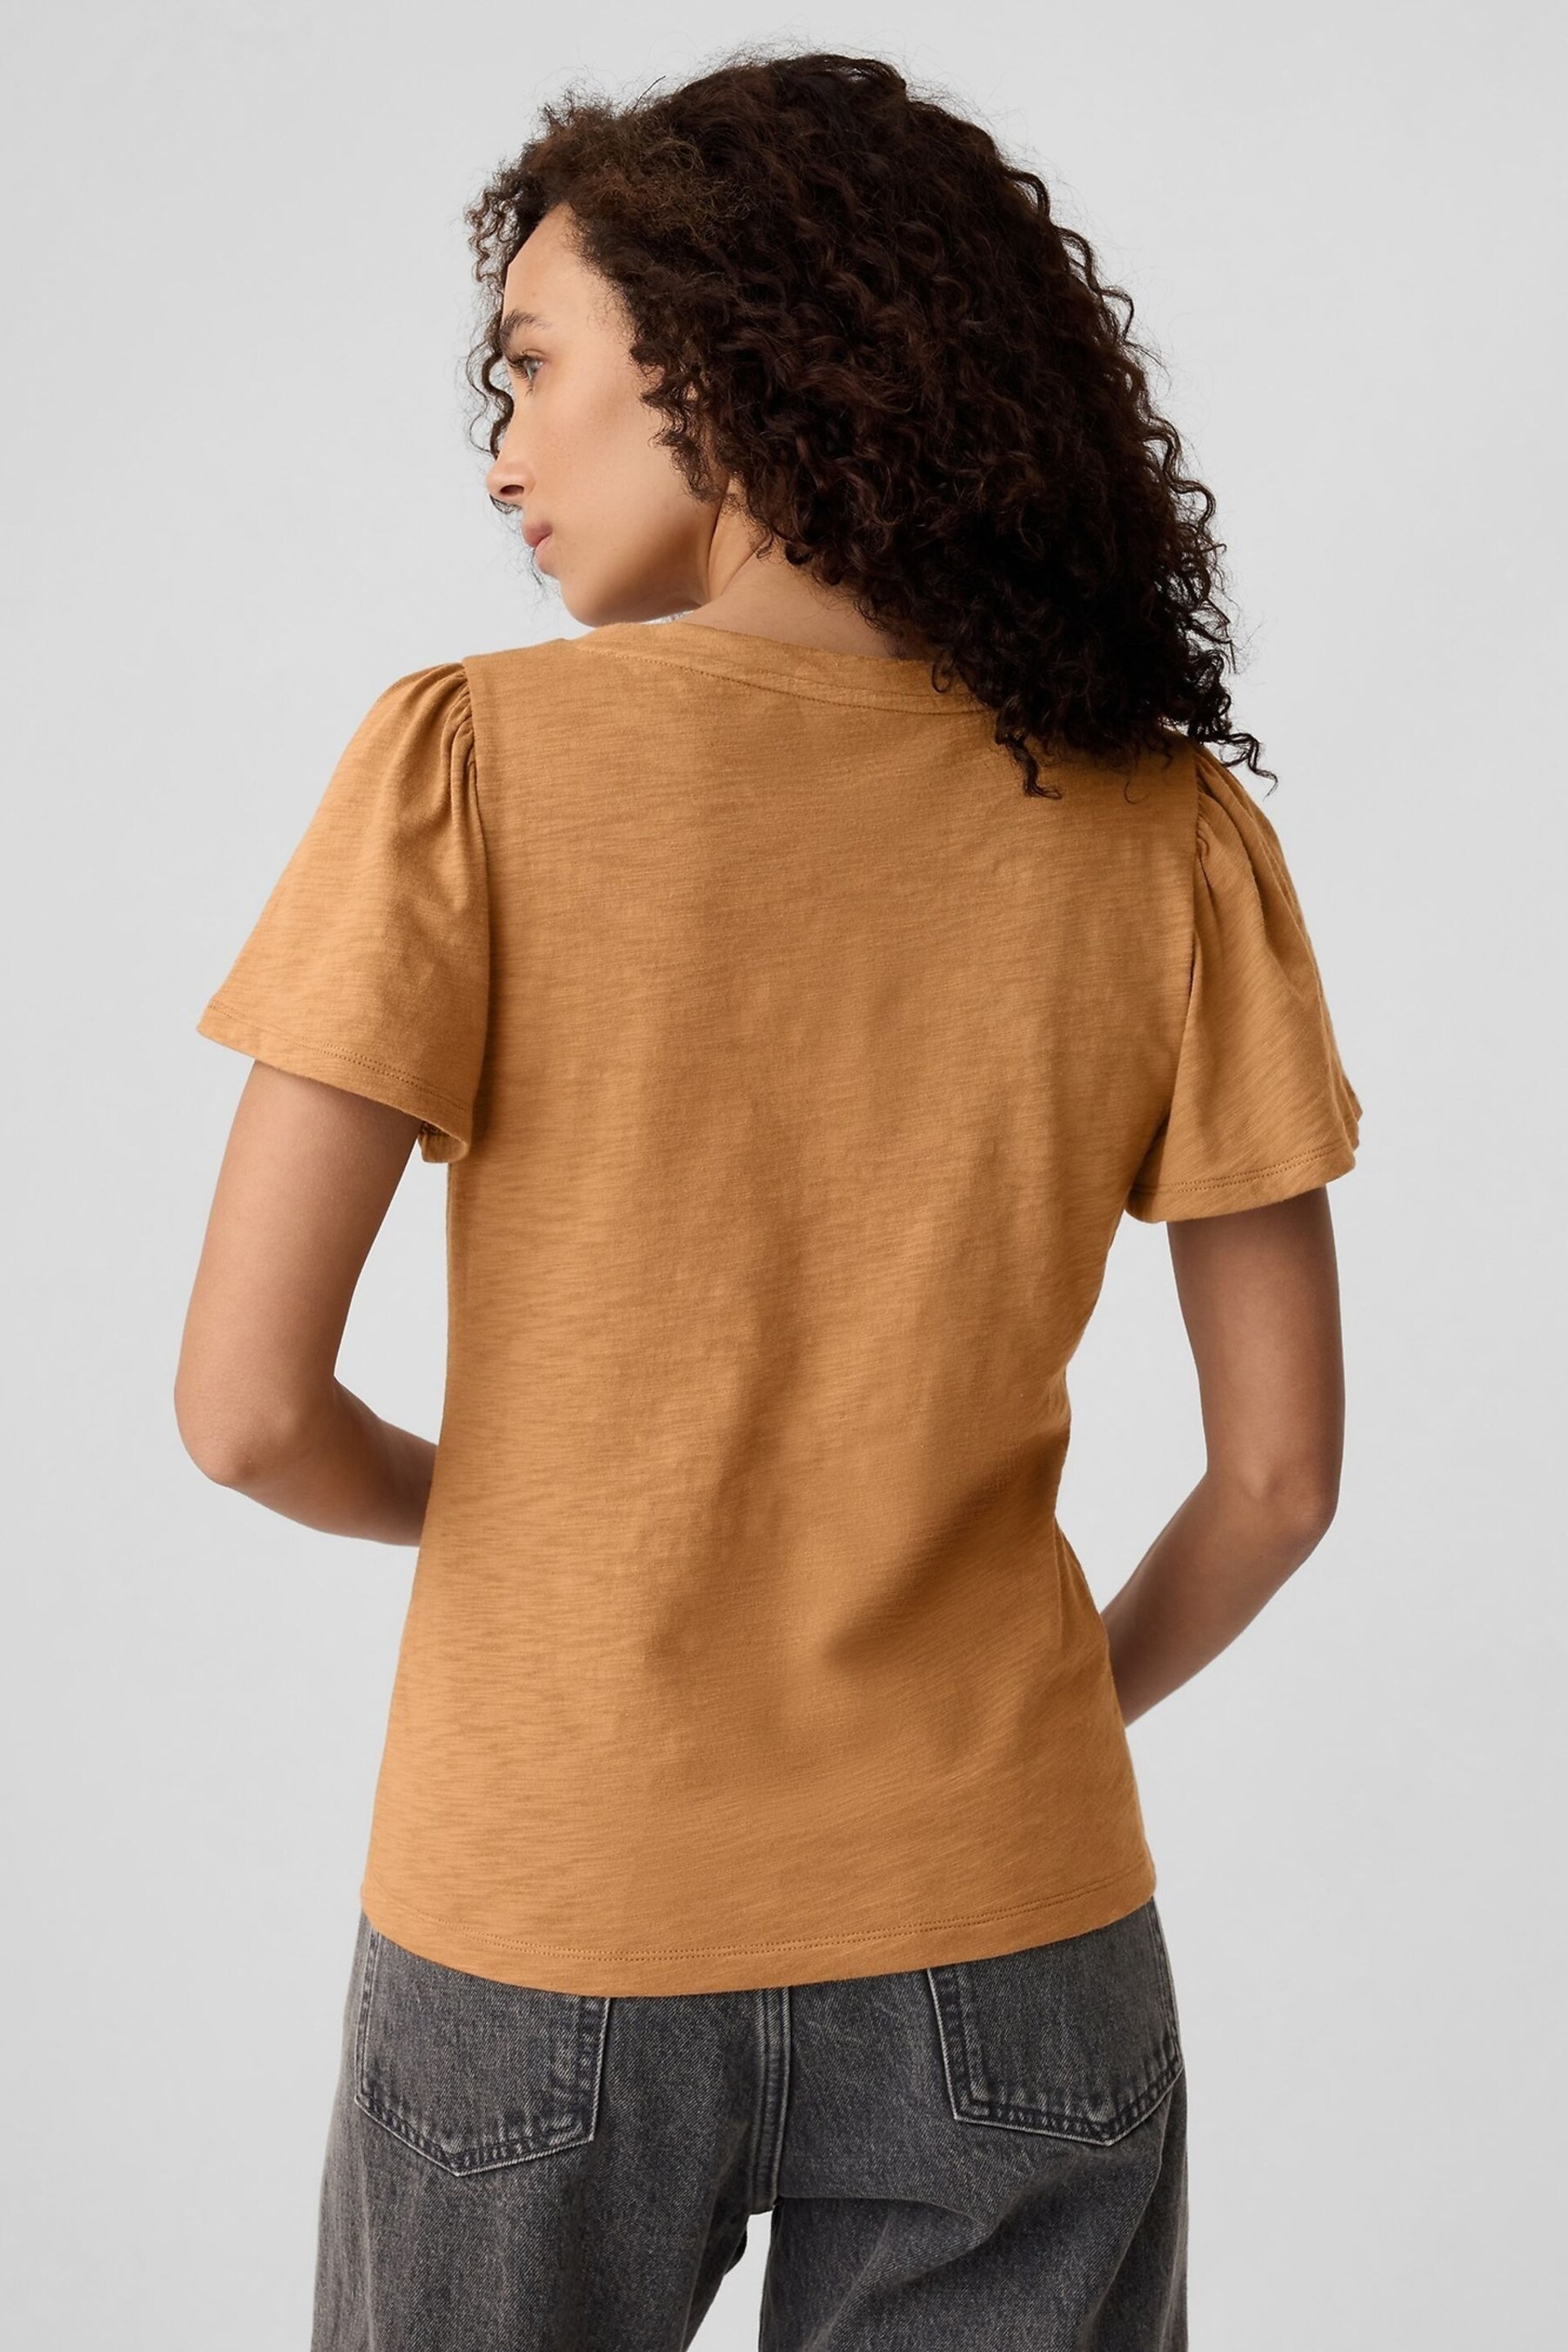 Gap Brown ForeverSoft Slub Short Sleeve T-Shirt - Image 2 of 5